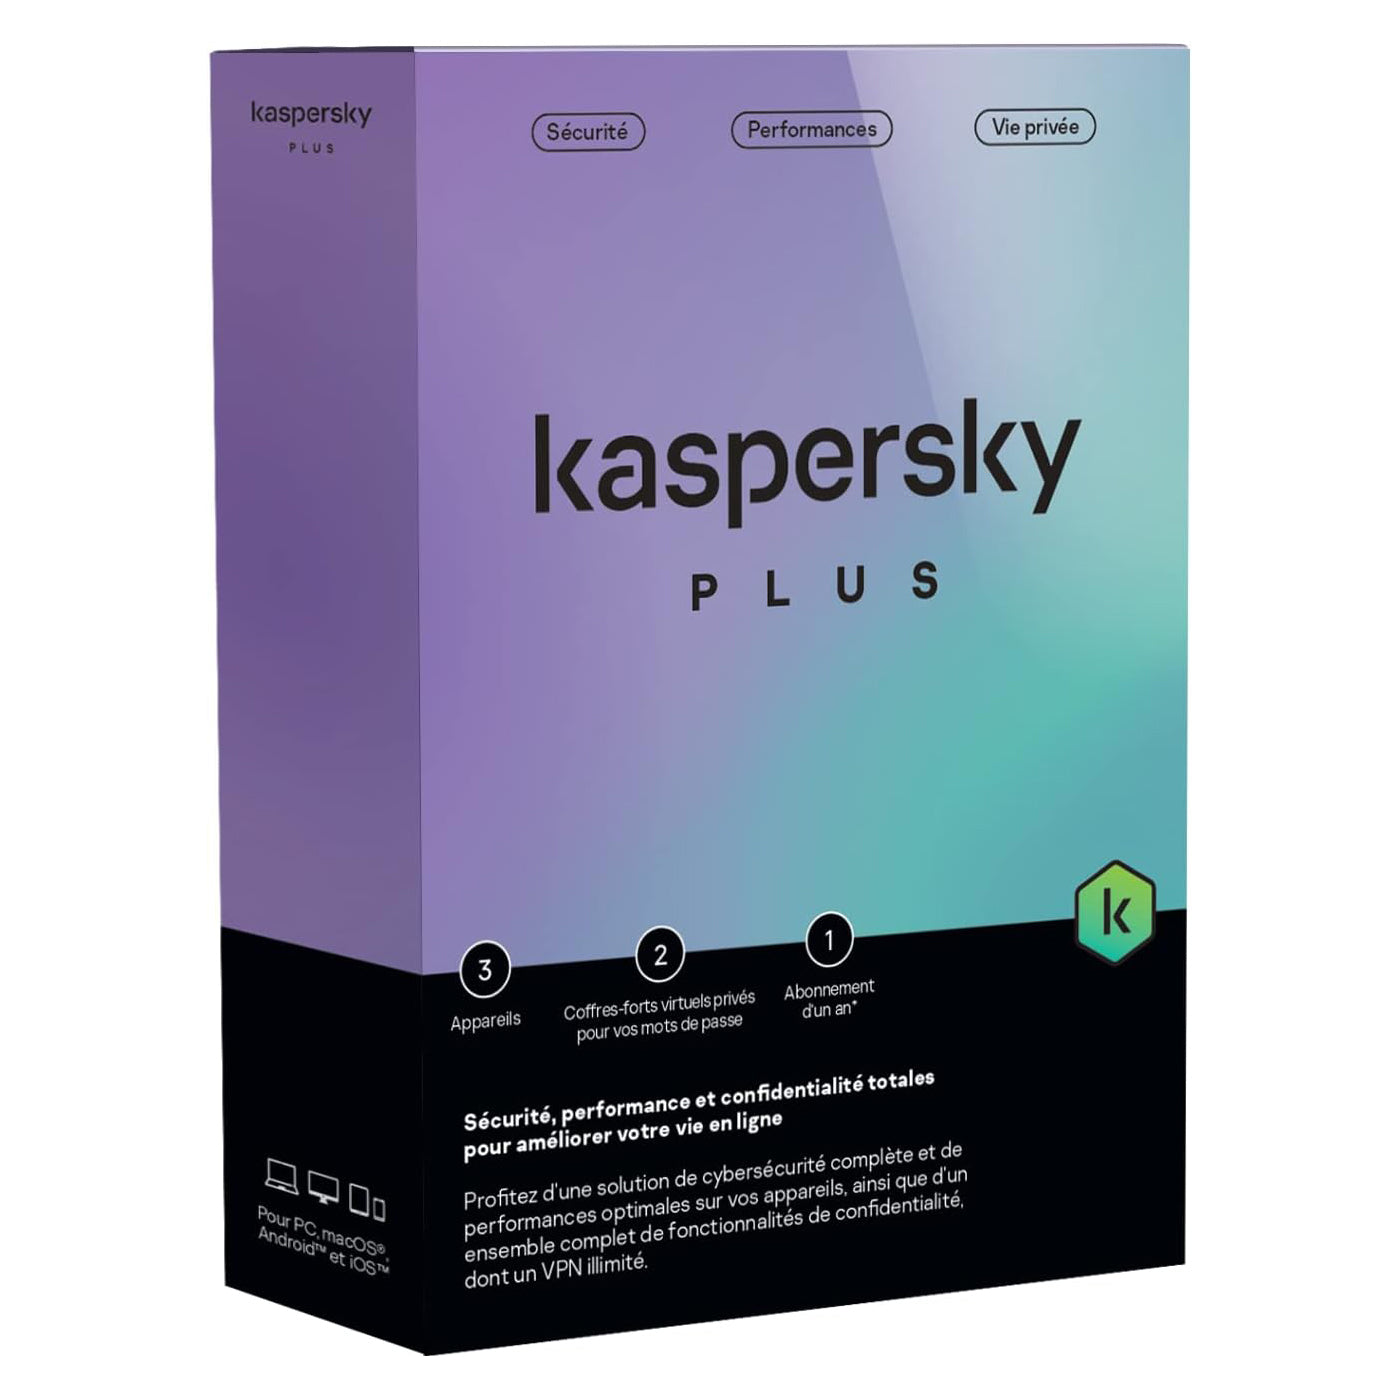 Kaspersky antivirus - Plus - License 3 Appareils / 1 an